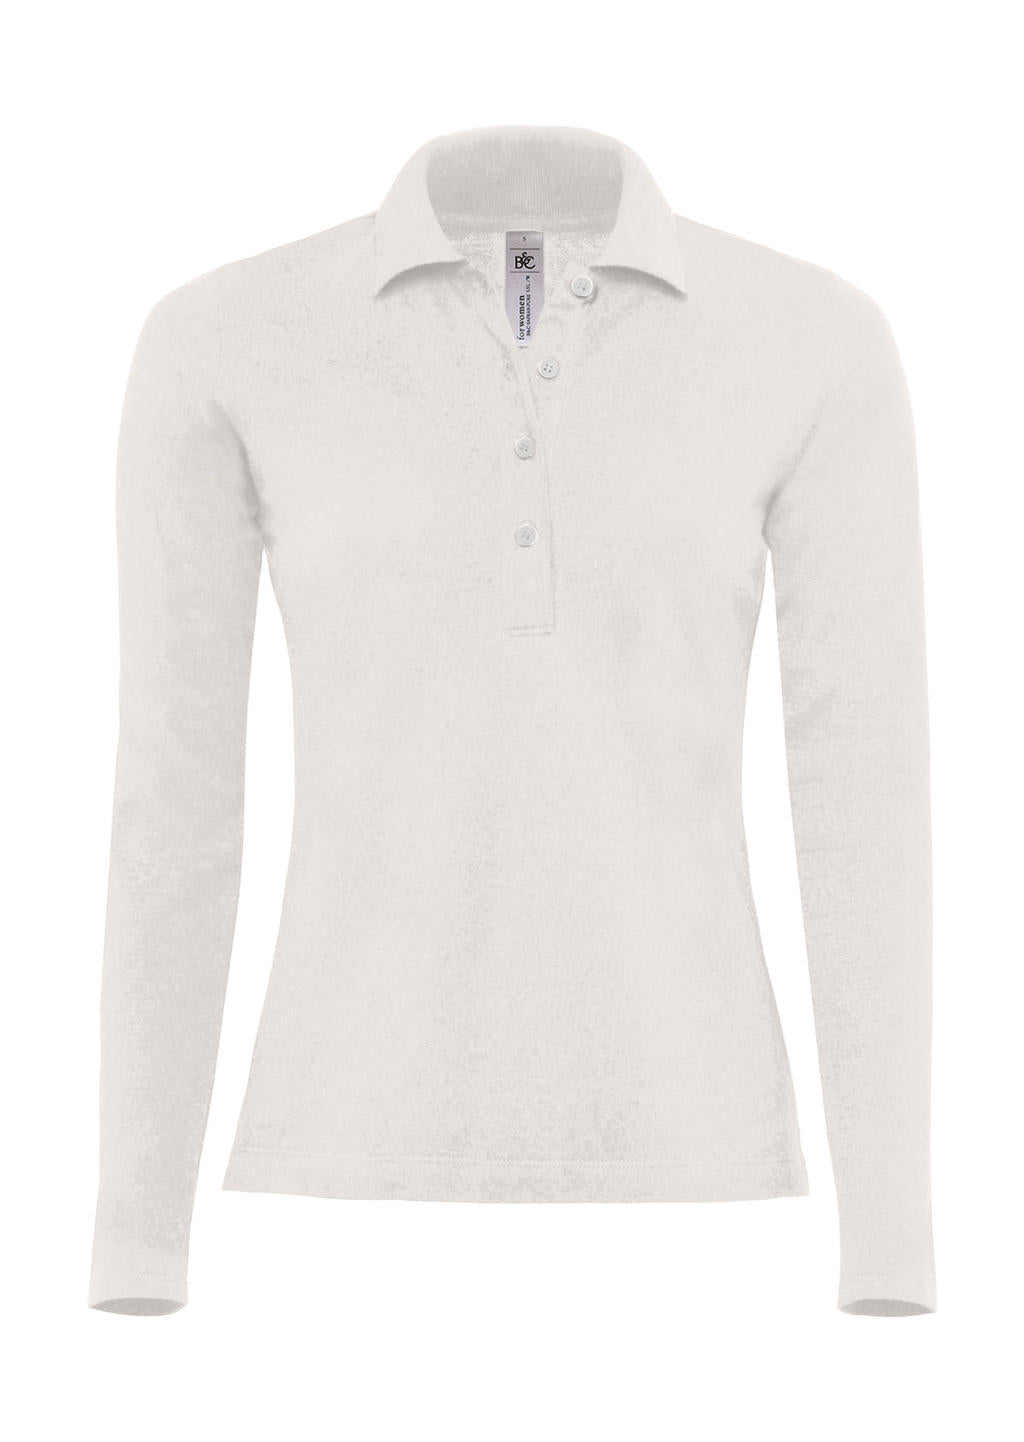 B&C Damen Polo Shirt T Shirt Kragen Poloshirt T-Shirt langarm